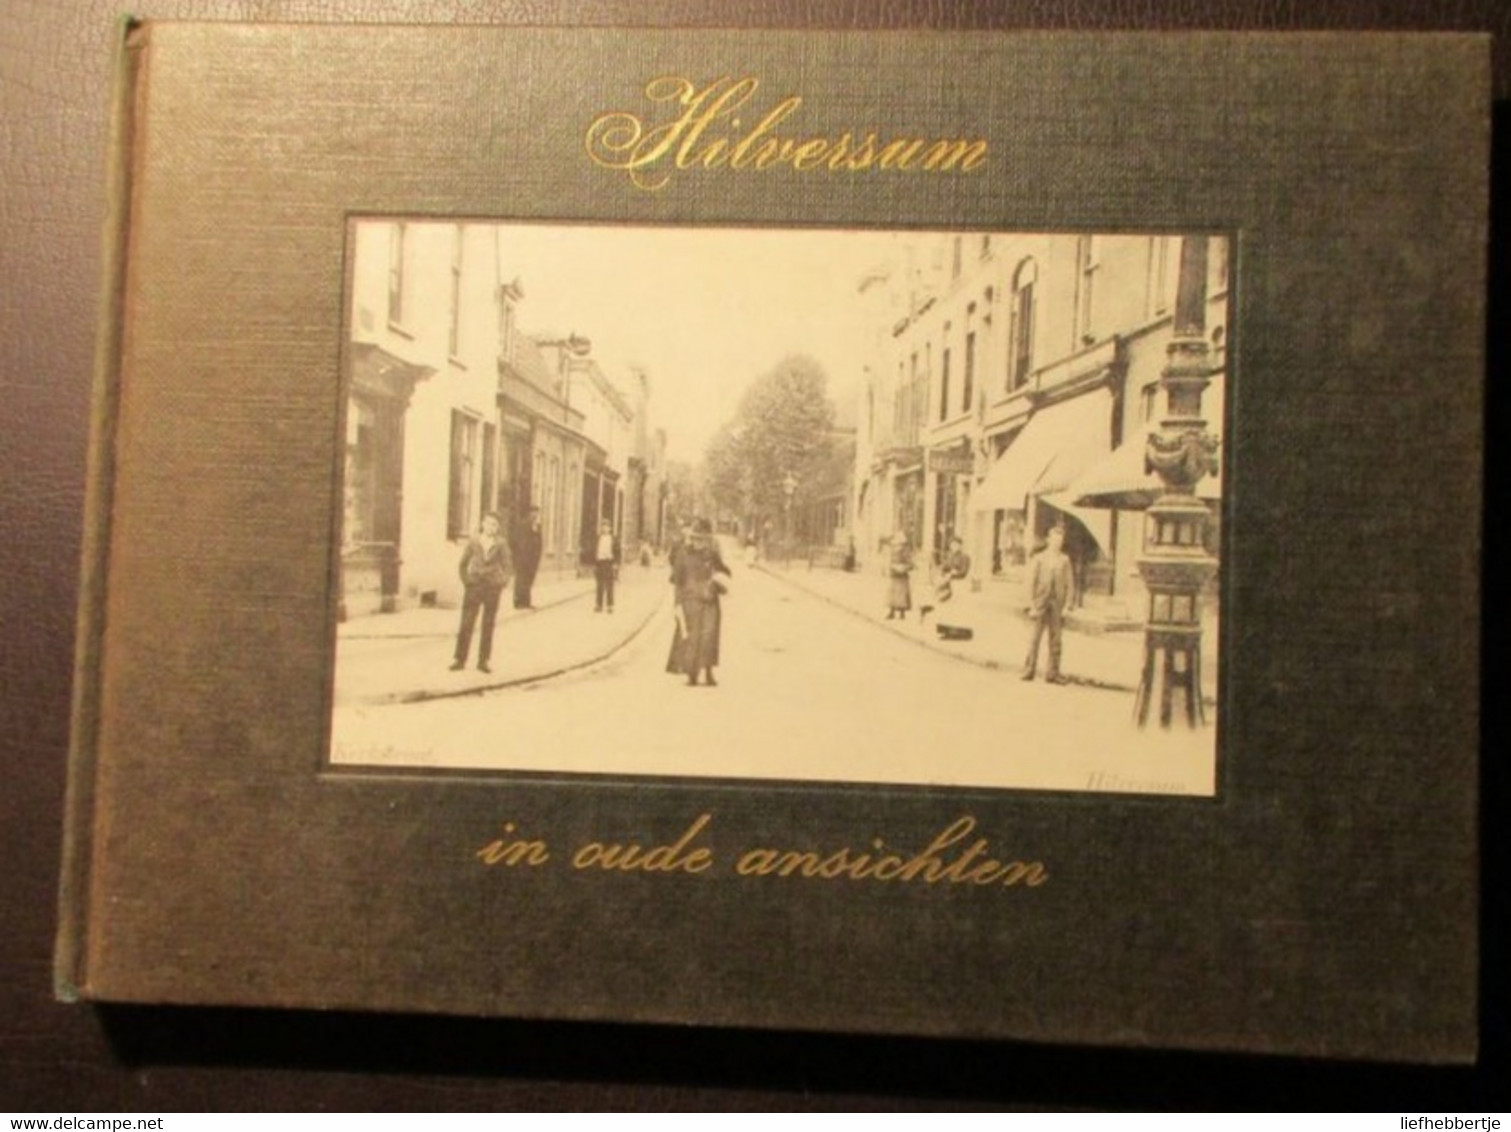 Hilversum In Oude Ansichten  -  Postkaarten - History